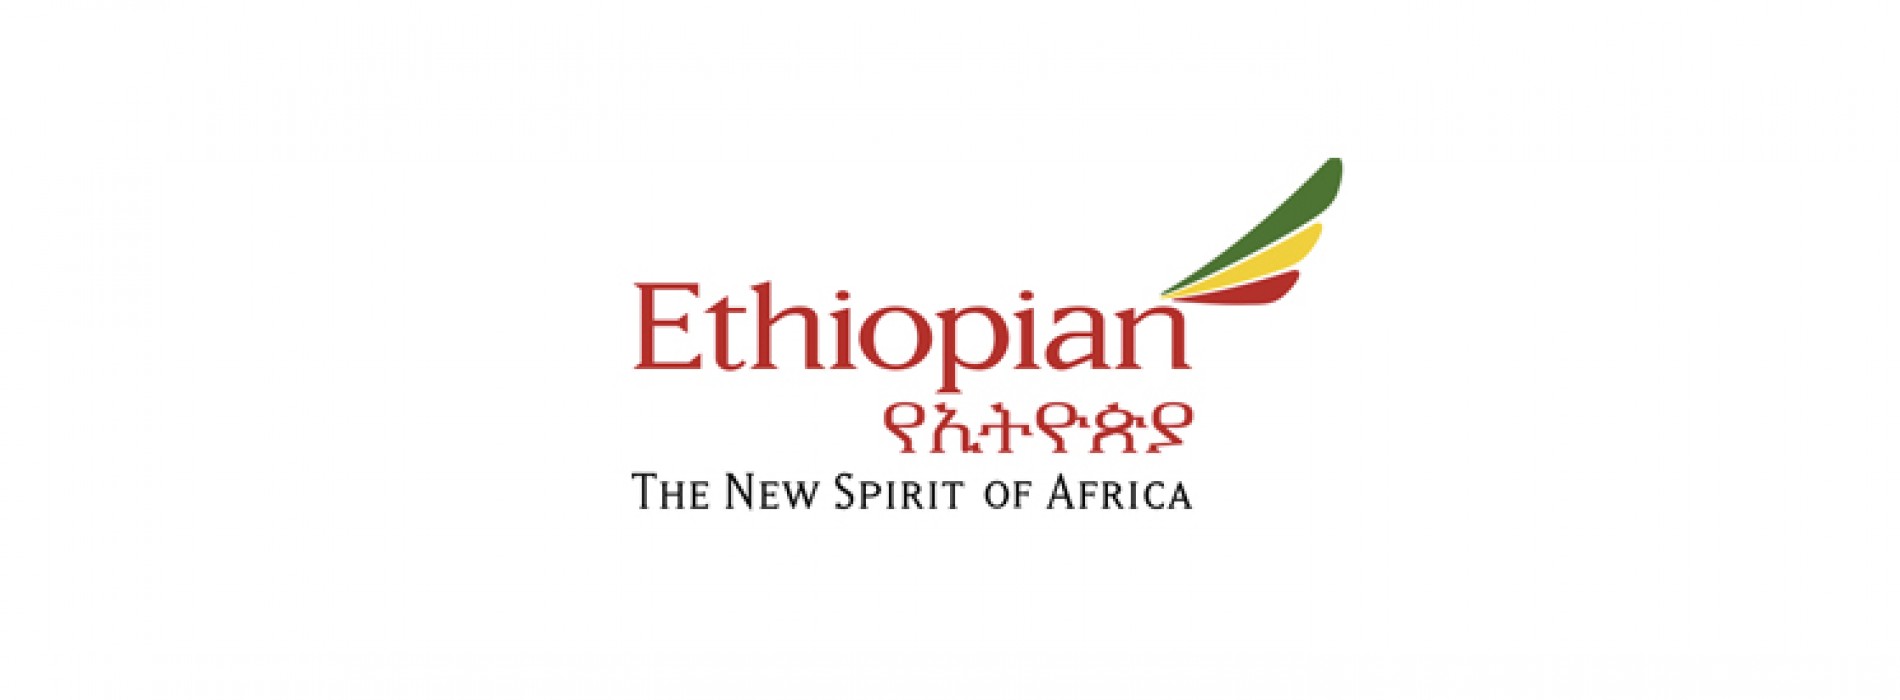 Ethiopian Airlines Establishes a Foundation